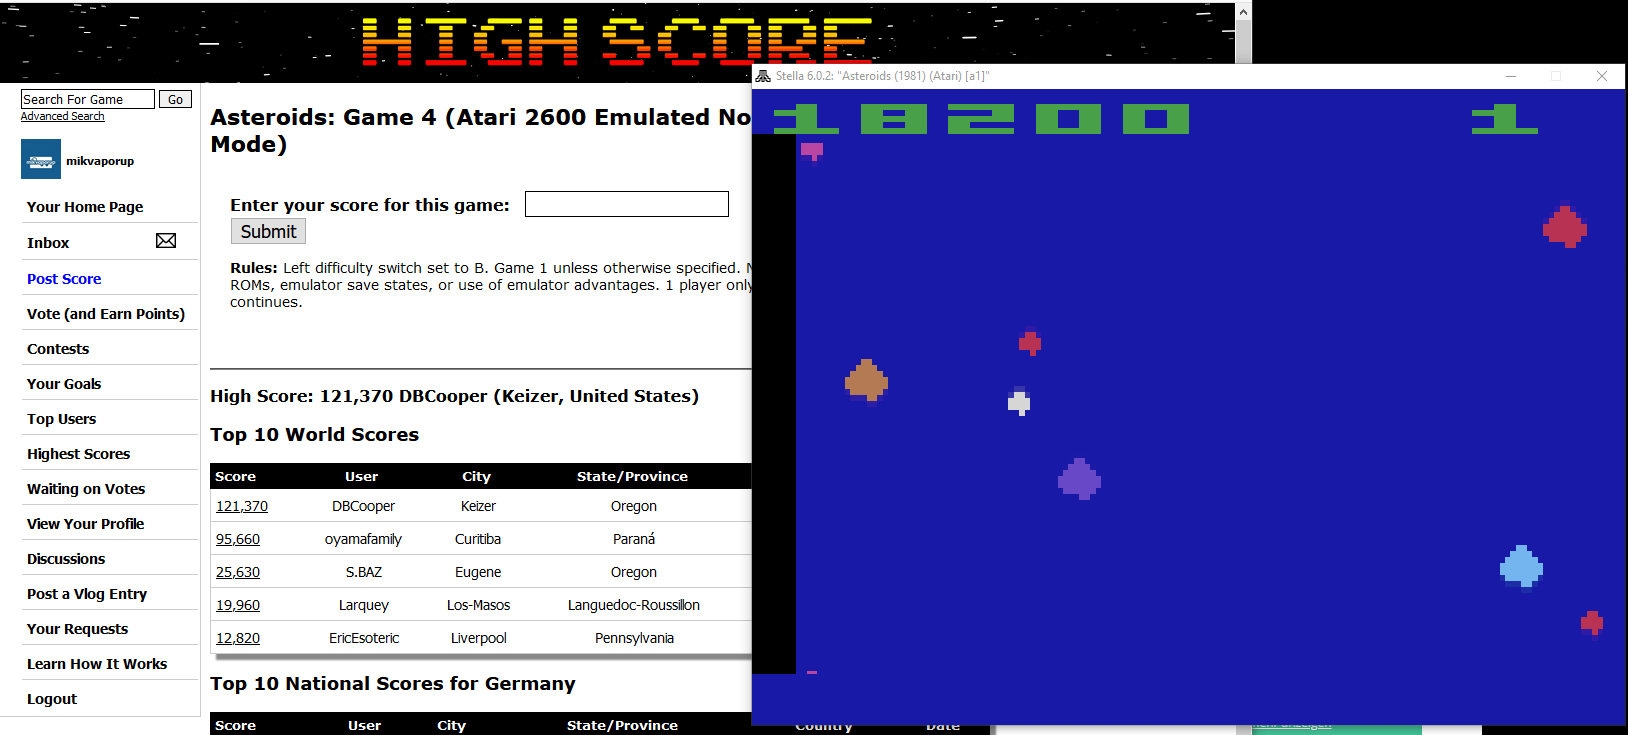 mikvaporup: Asteroids: Game 4 (Atari 2600 Emulated Novice/B Mode) 18,200 points on 2020-02-22 05:43:45